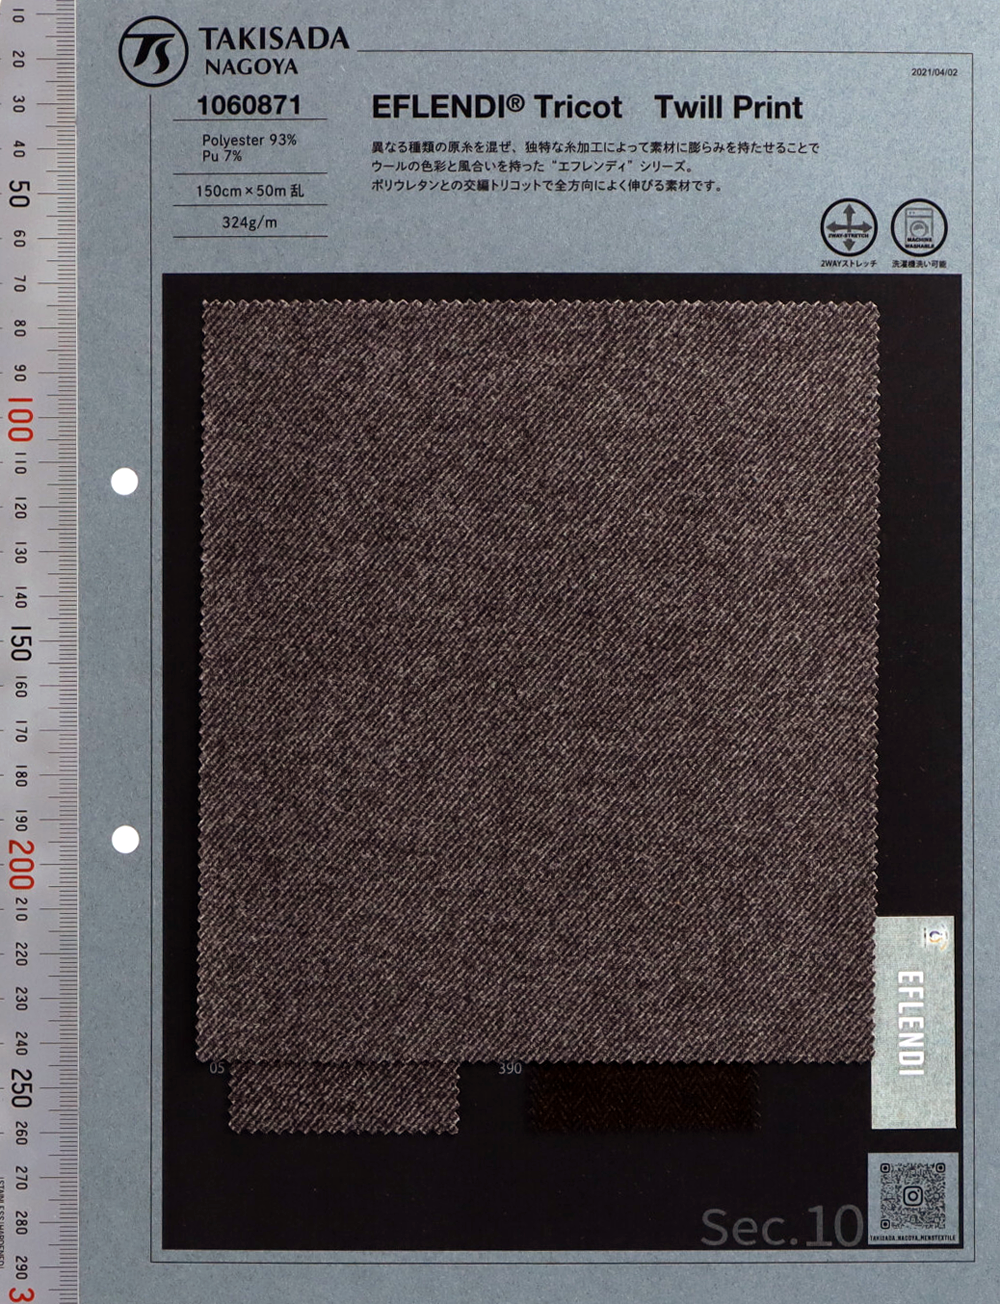 1060871 EFLENDI® Tricot Print[Textile / Fabric] Takisada Nagoya